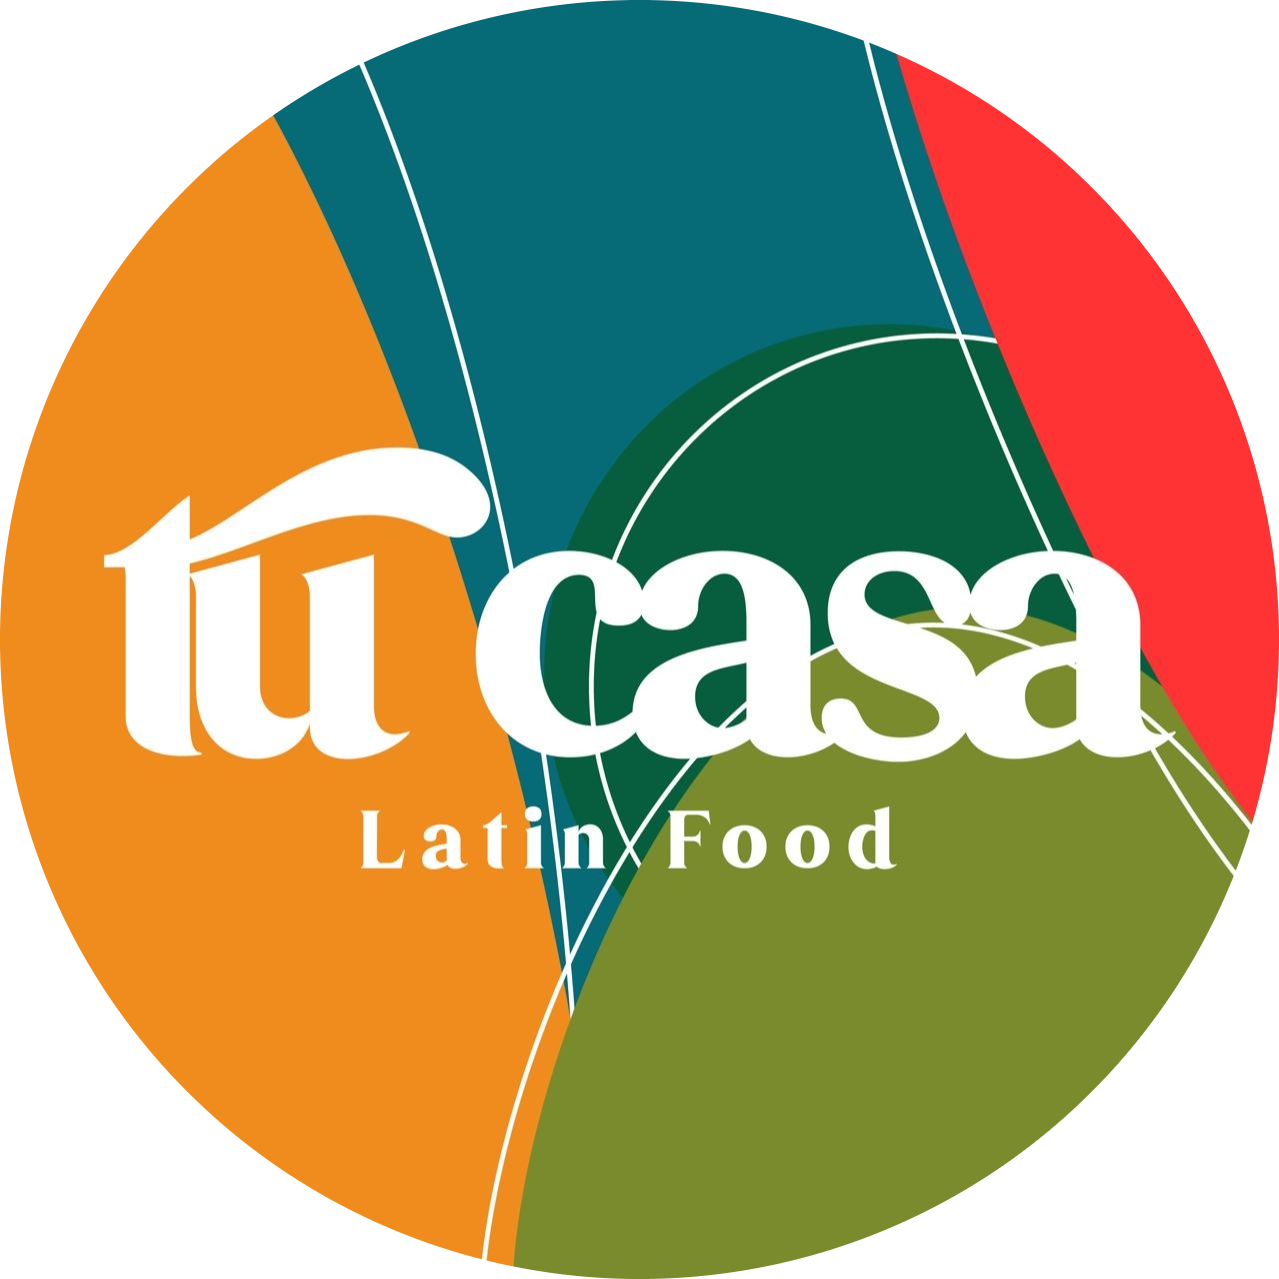 Tu Casa Latin food Restaurant logo